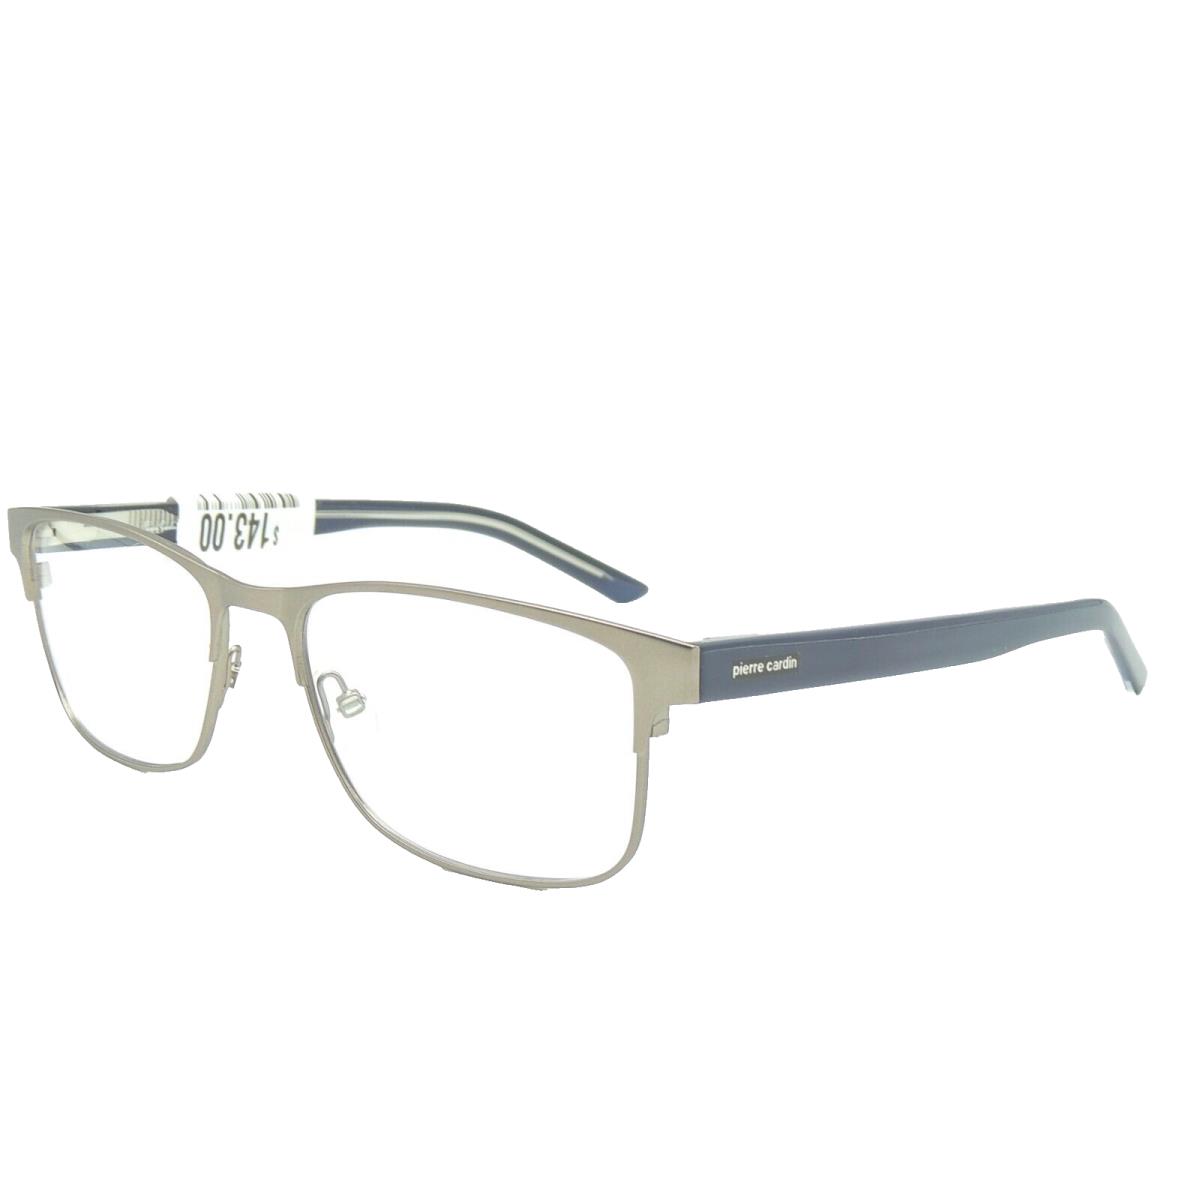 Pierre Cardin PC 6781 Fxa Gumetal Navy Eyeglass Frame 54 17 145